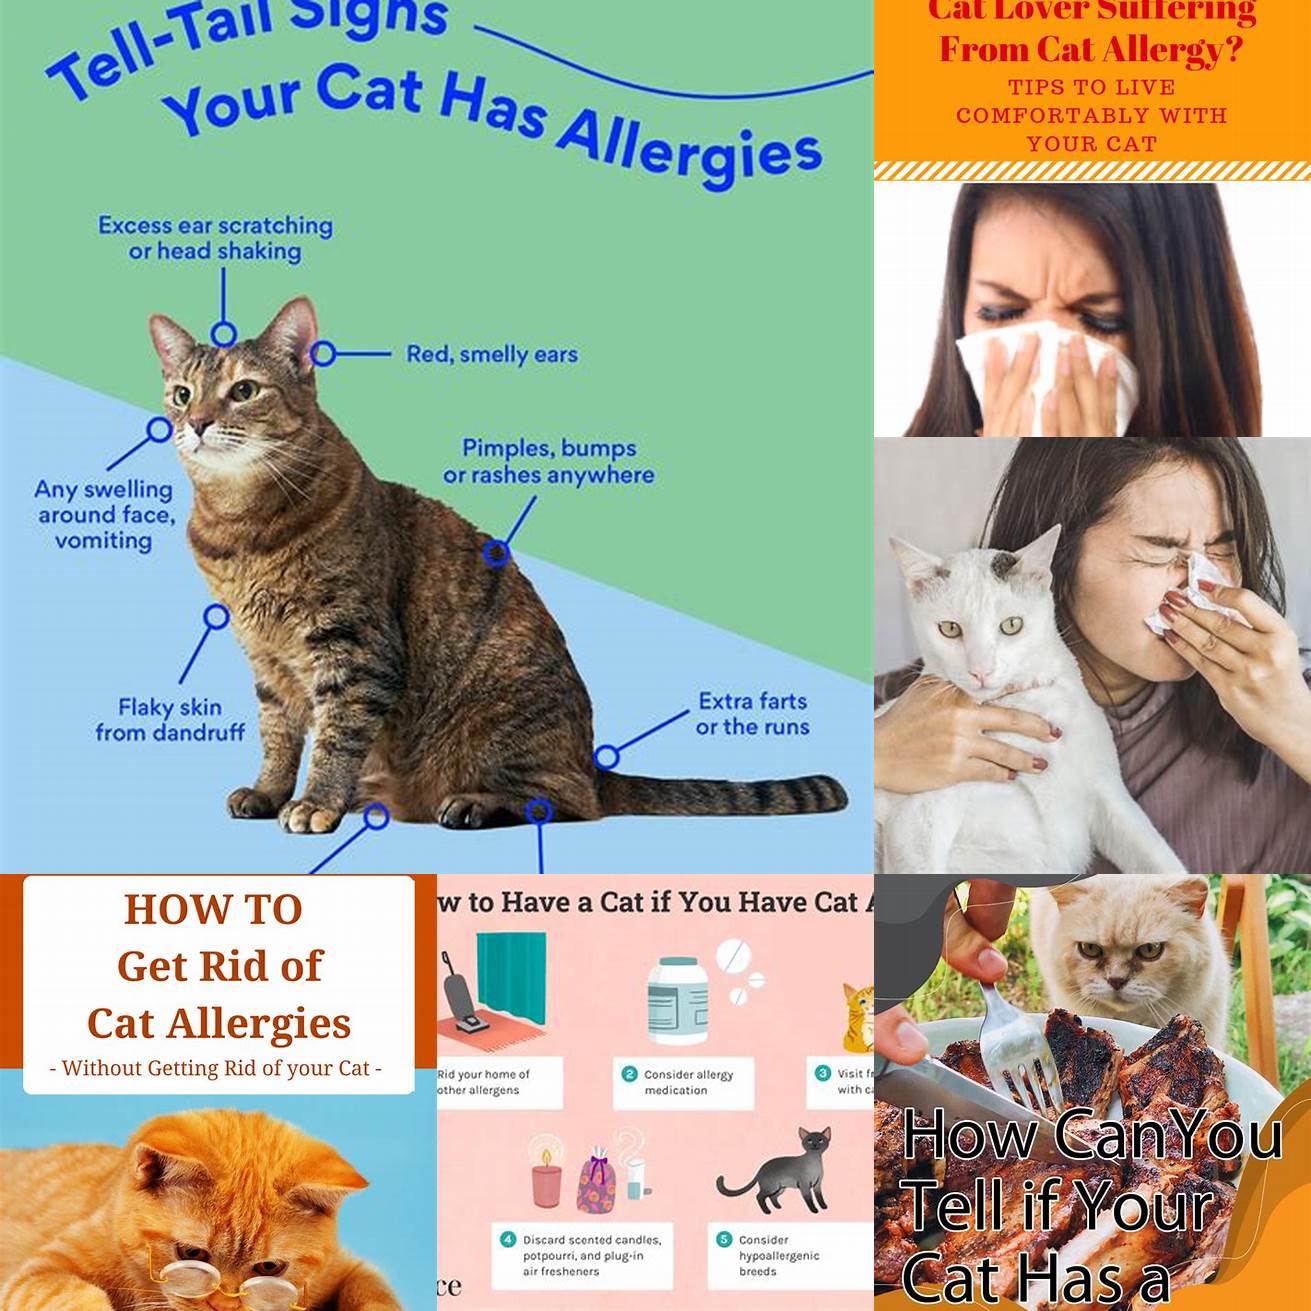 Avoid exposing your cat to allergens